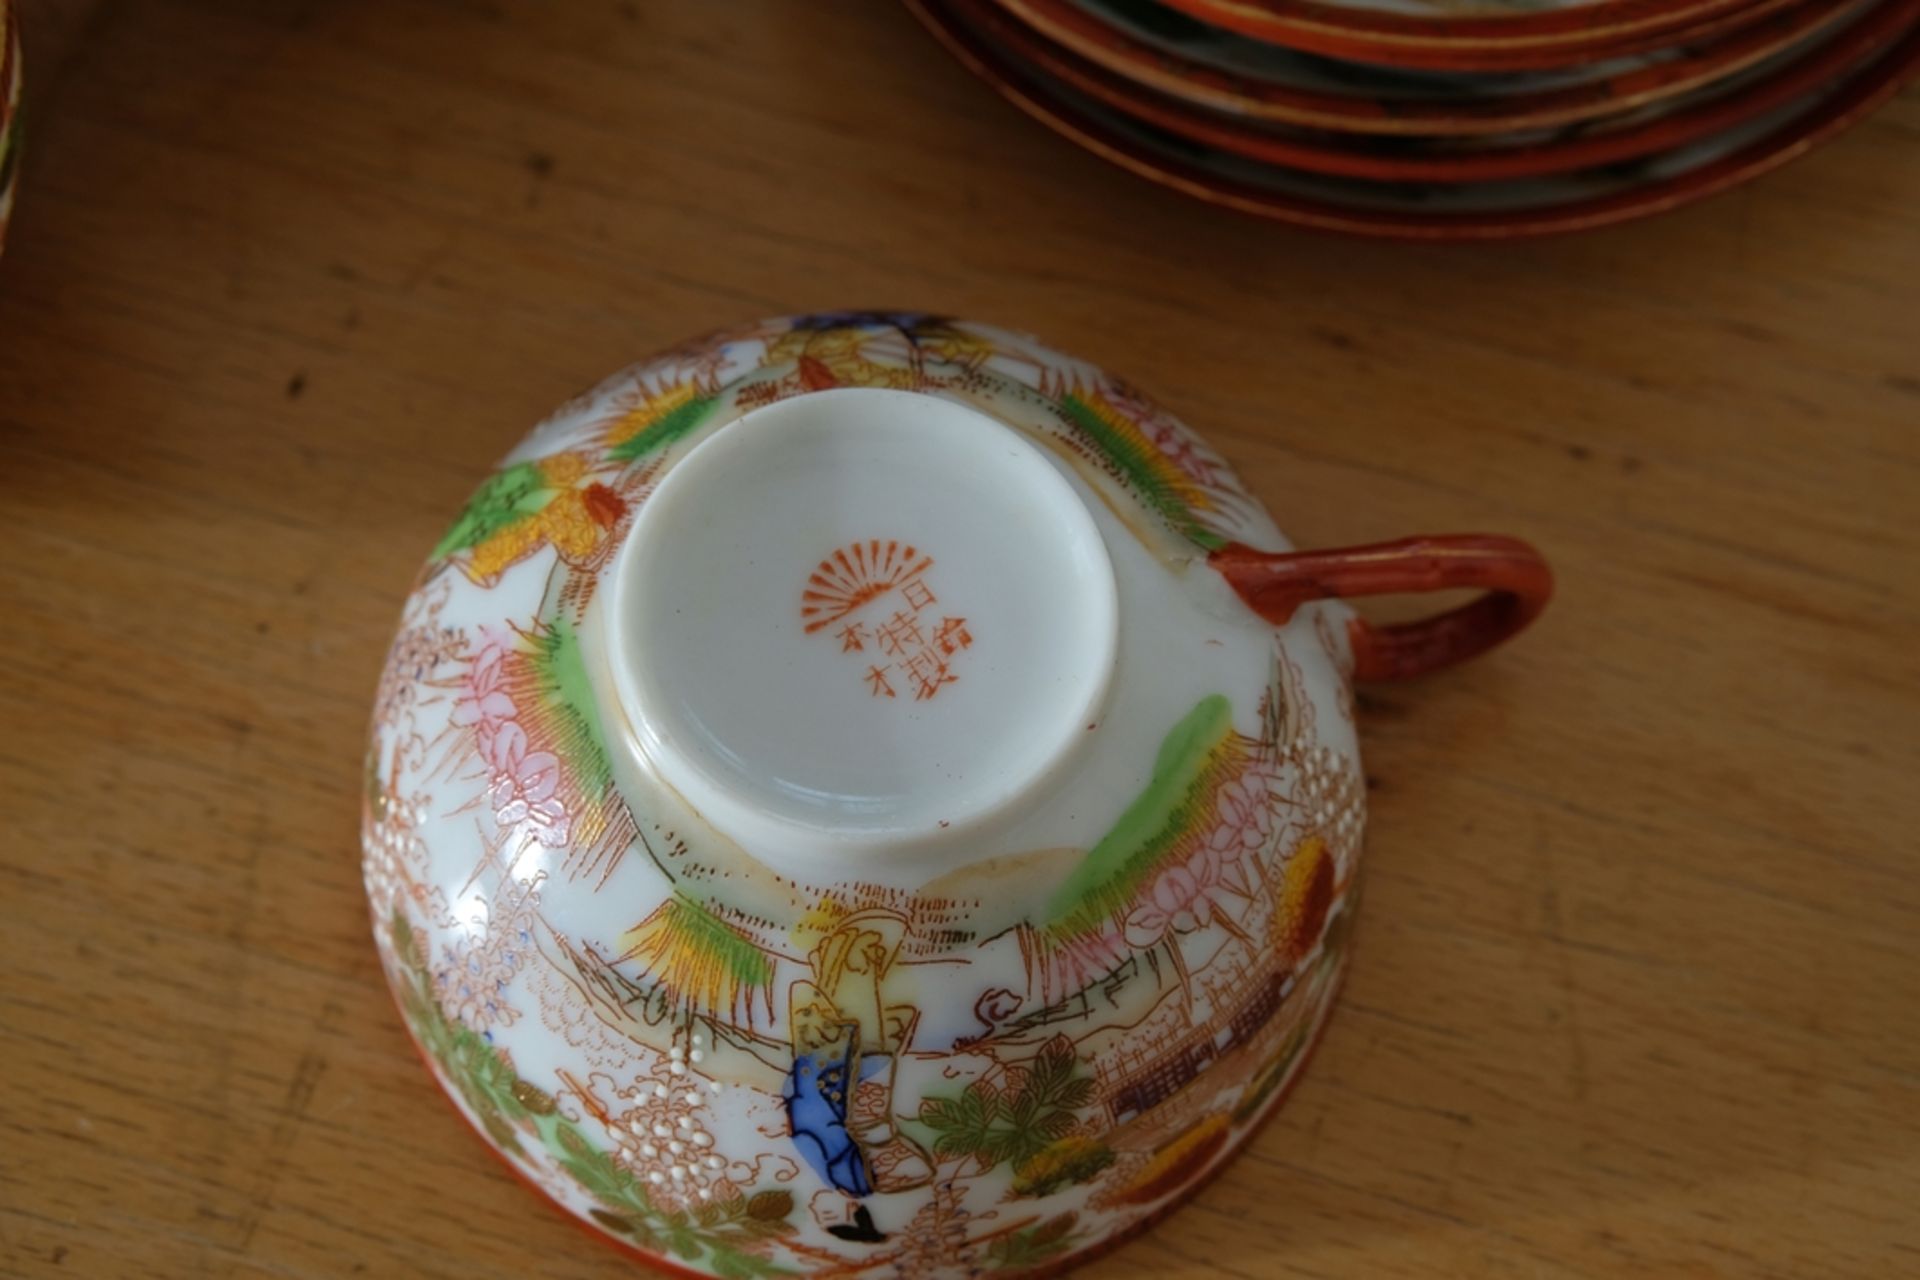 Tea service, Japanese, lid of sugar bowl missing - Image 5 of 6